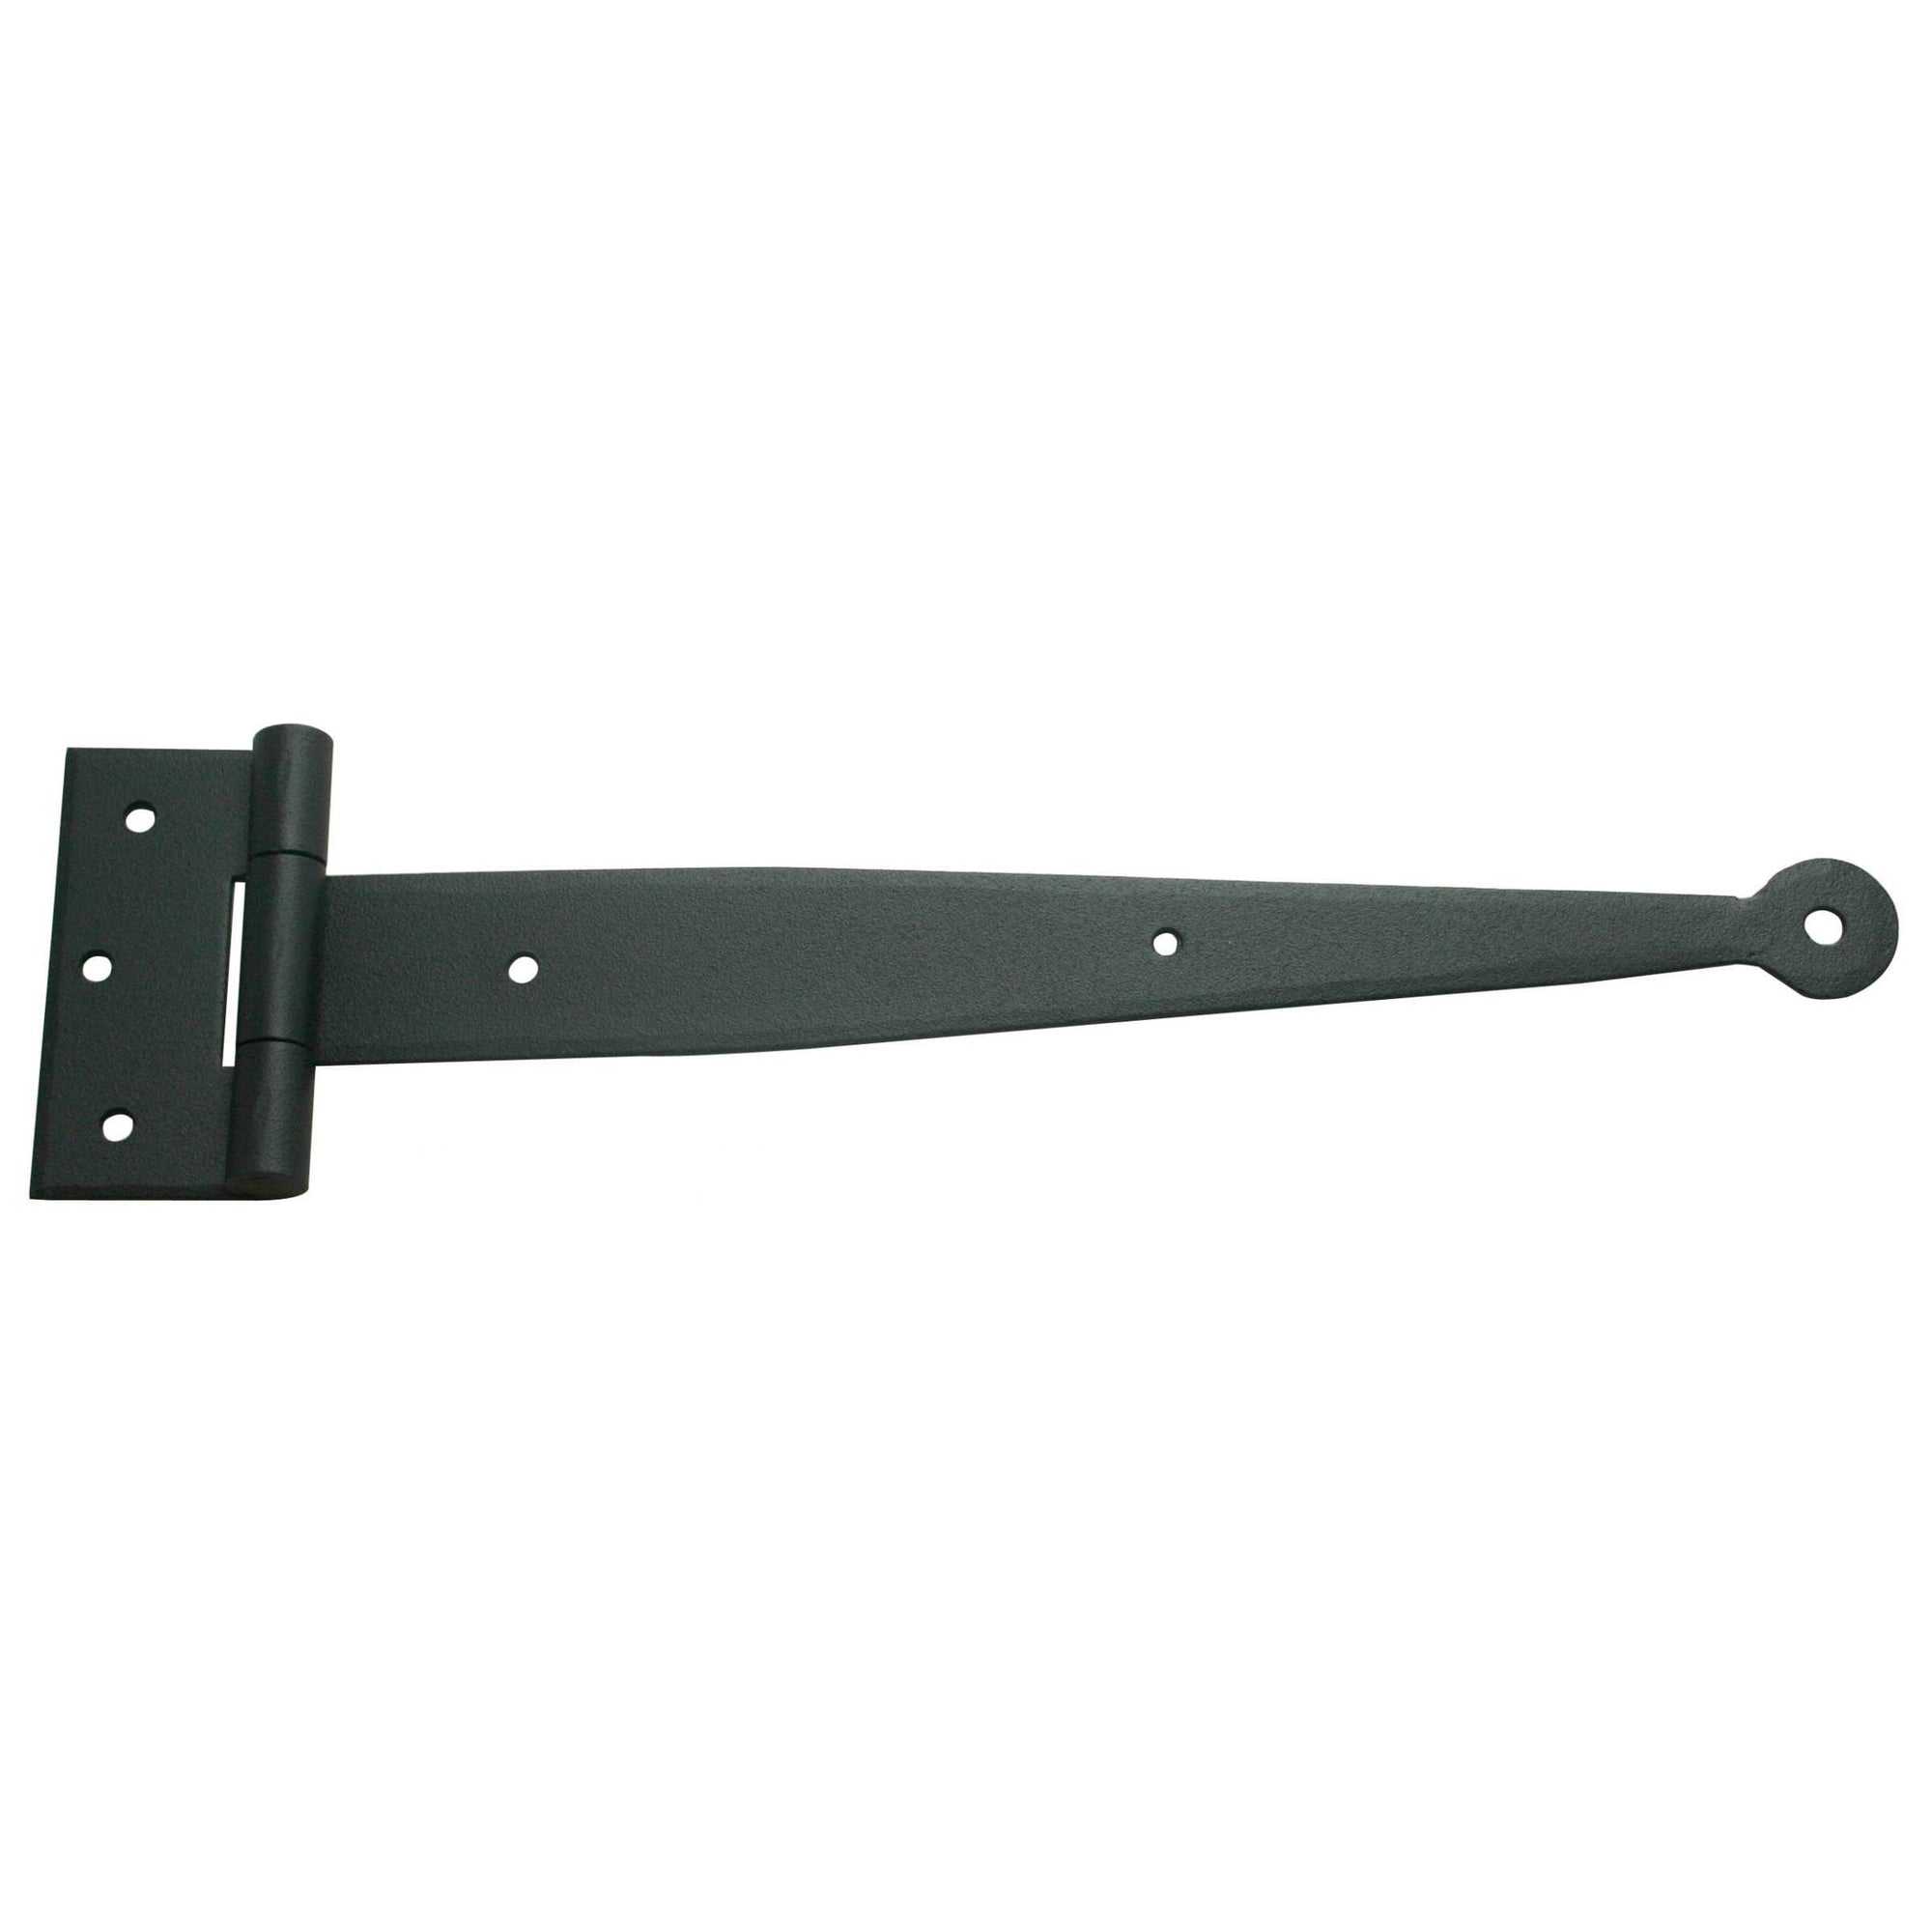 Strap hinge for shutters - spade tip - 9 1/4 inch - minimal offset